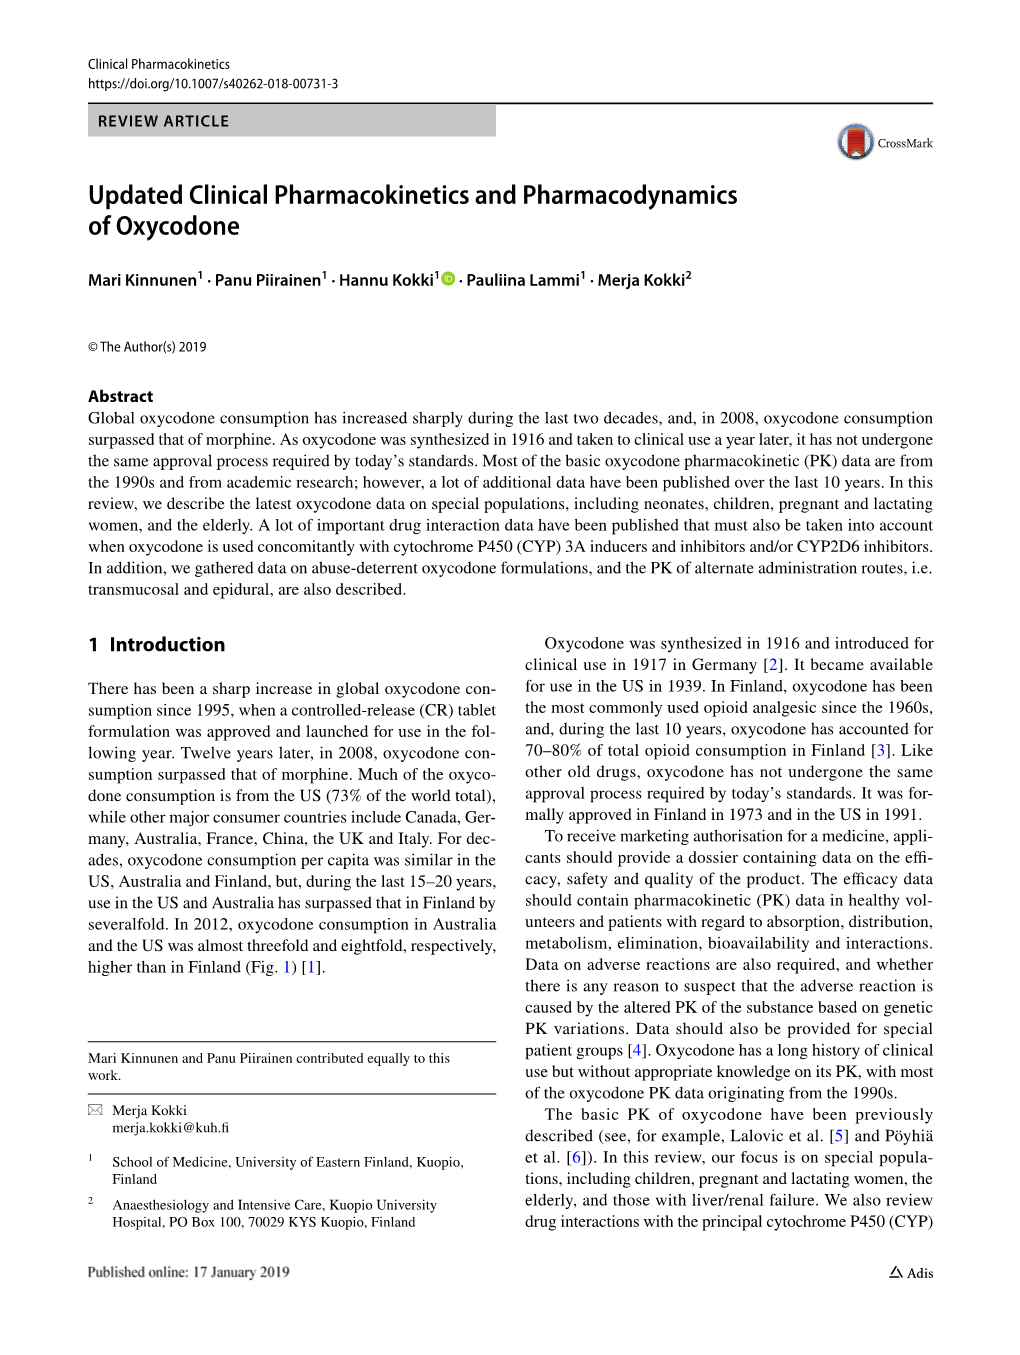 Updated Clinical Pharmacokinetics and Pharmacodynamics of Oxycodone